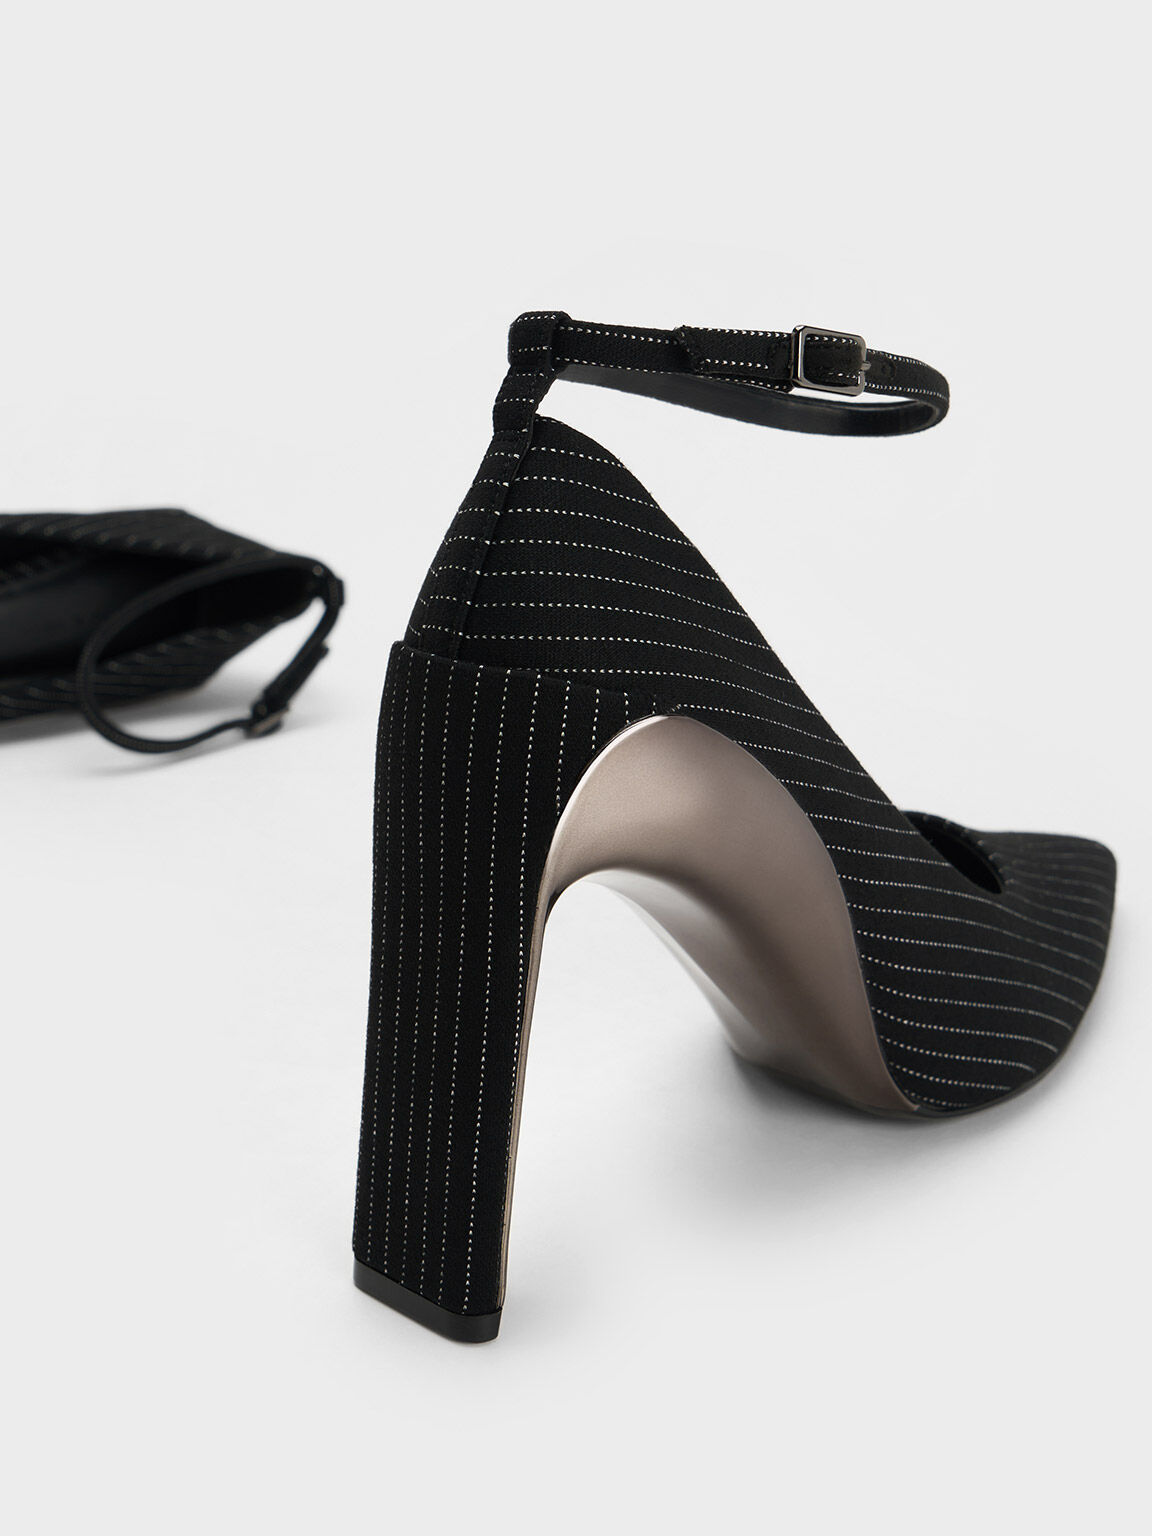 VIA SPIGA EVERET Gunmetal Dark Grey Leather Designer High Heel Sandals 9  $175 | eBay